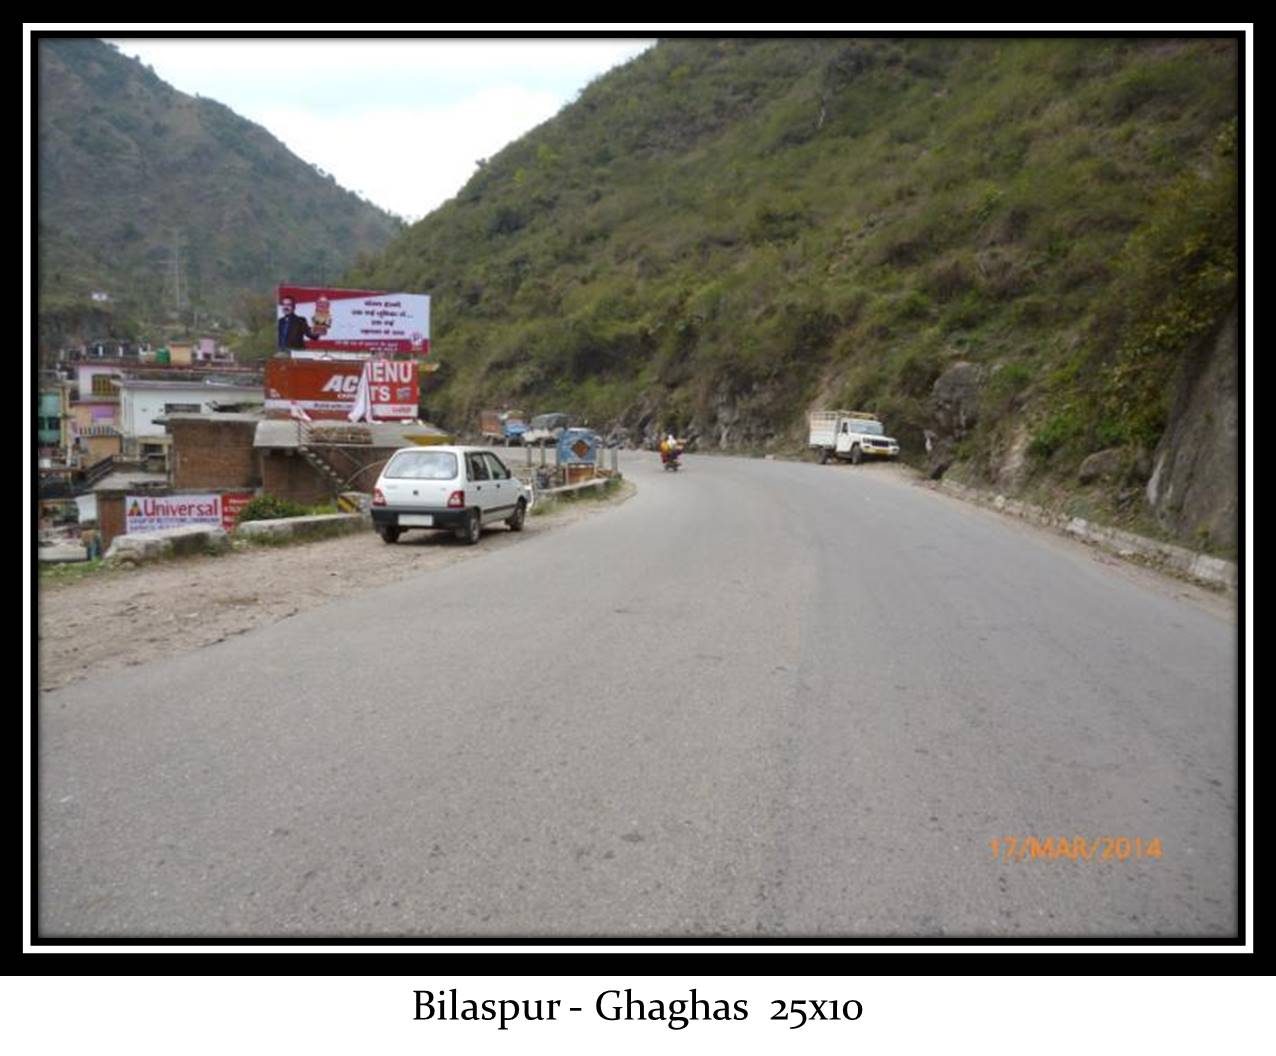 Ghaghas, Bilaspur